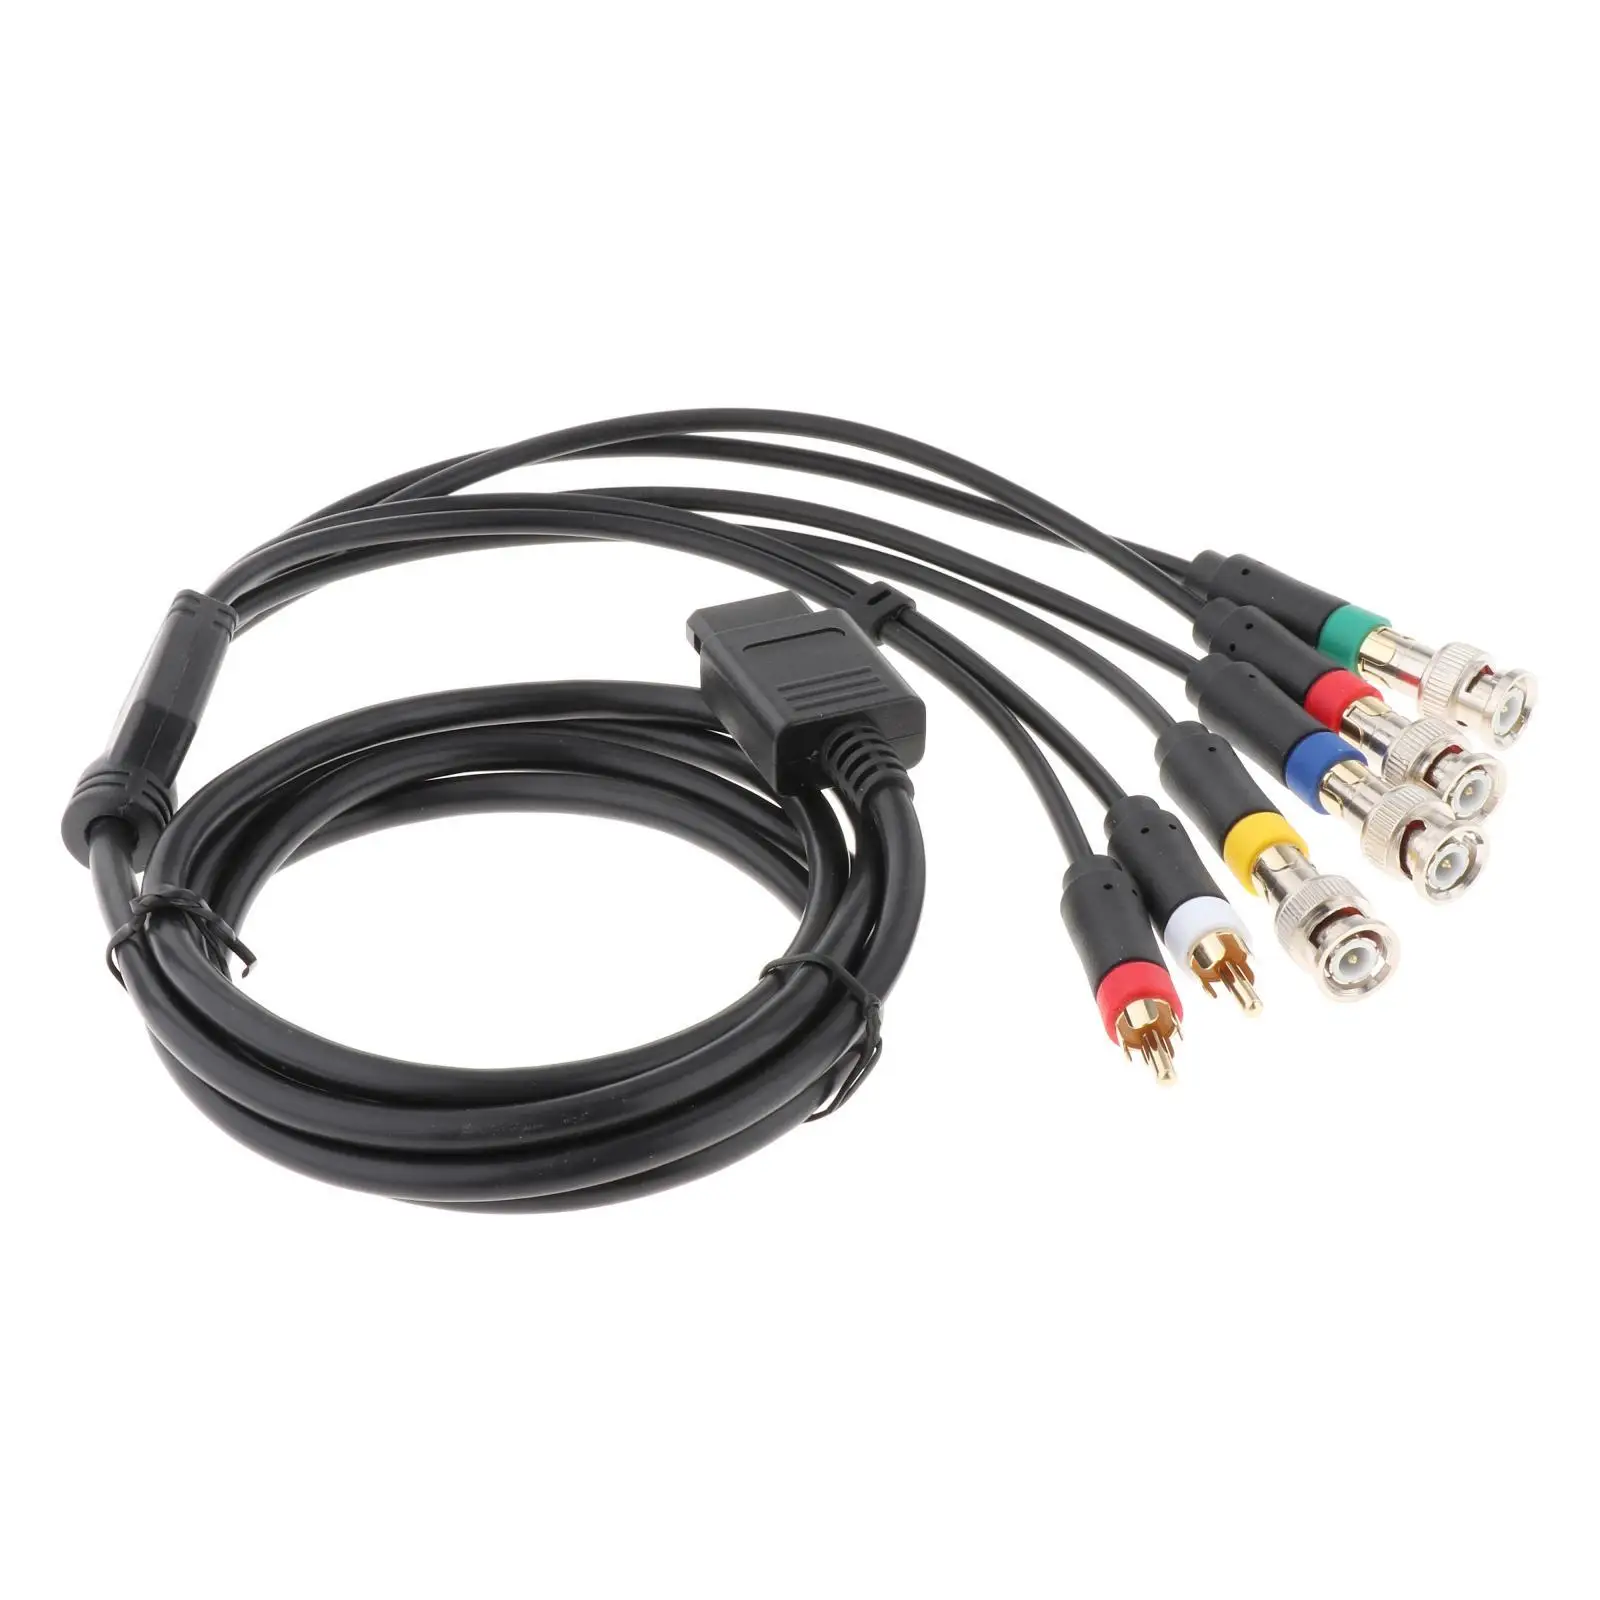 AV Composite Retro Cable RCA TV Audio Video Standard Cords Connector for Nintendo 64 Sfc